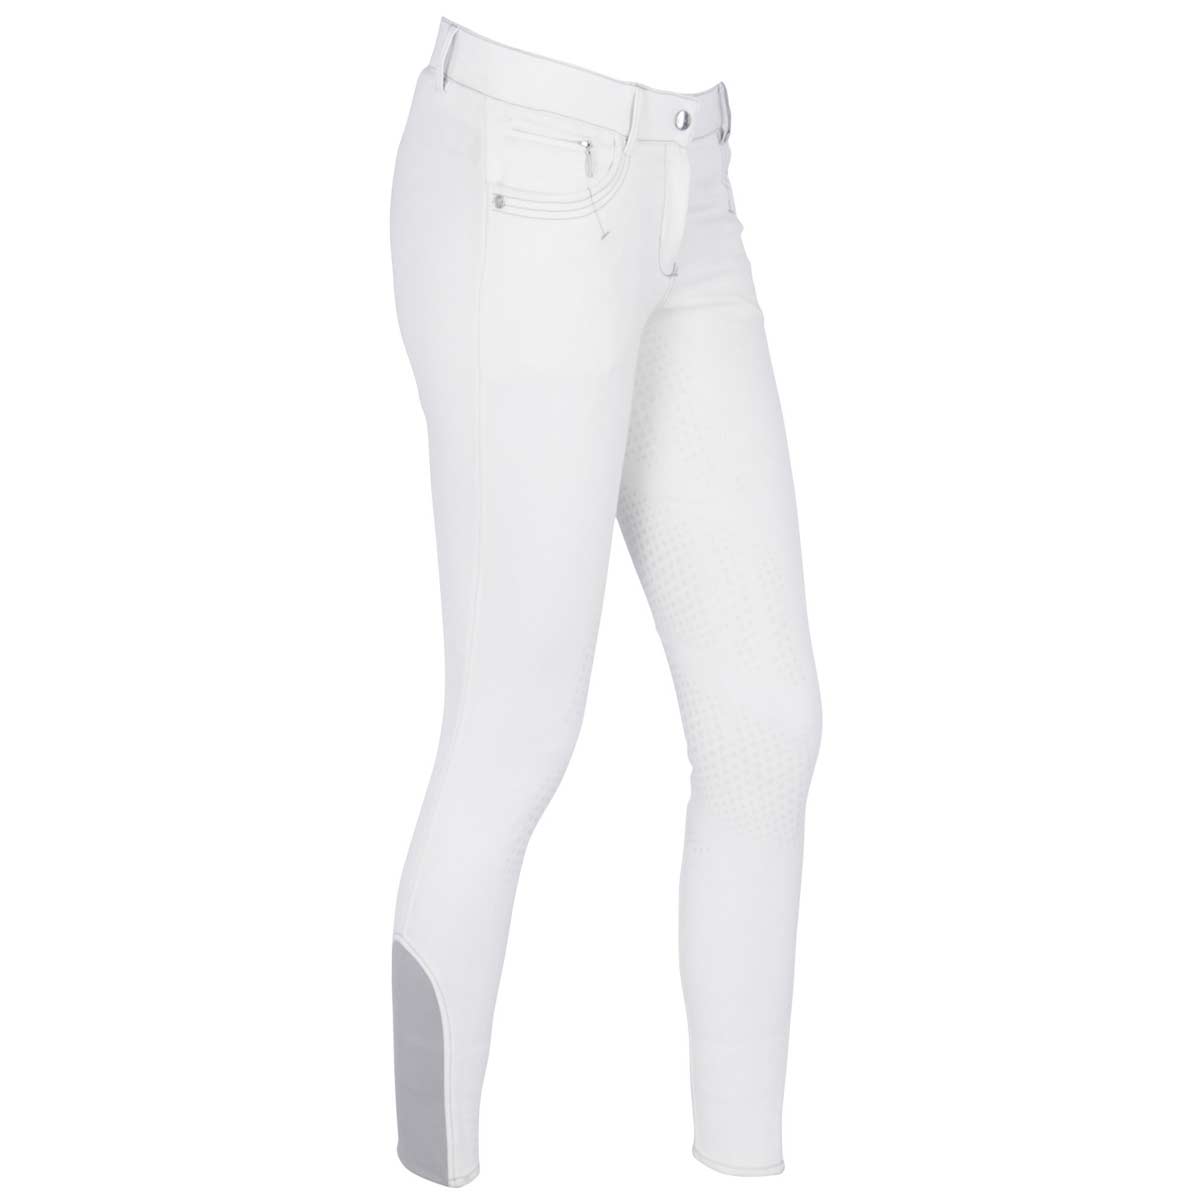 Covalliero lovagló nadrág BasicPlus női fehér 40